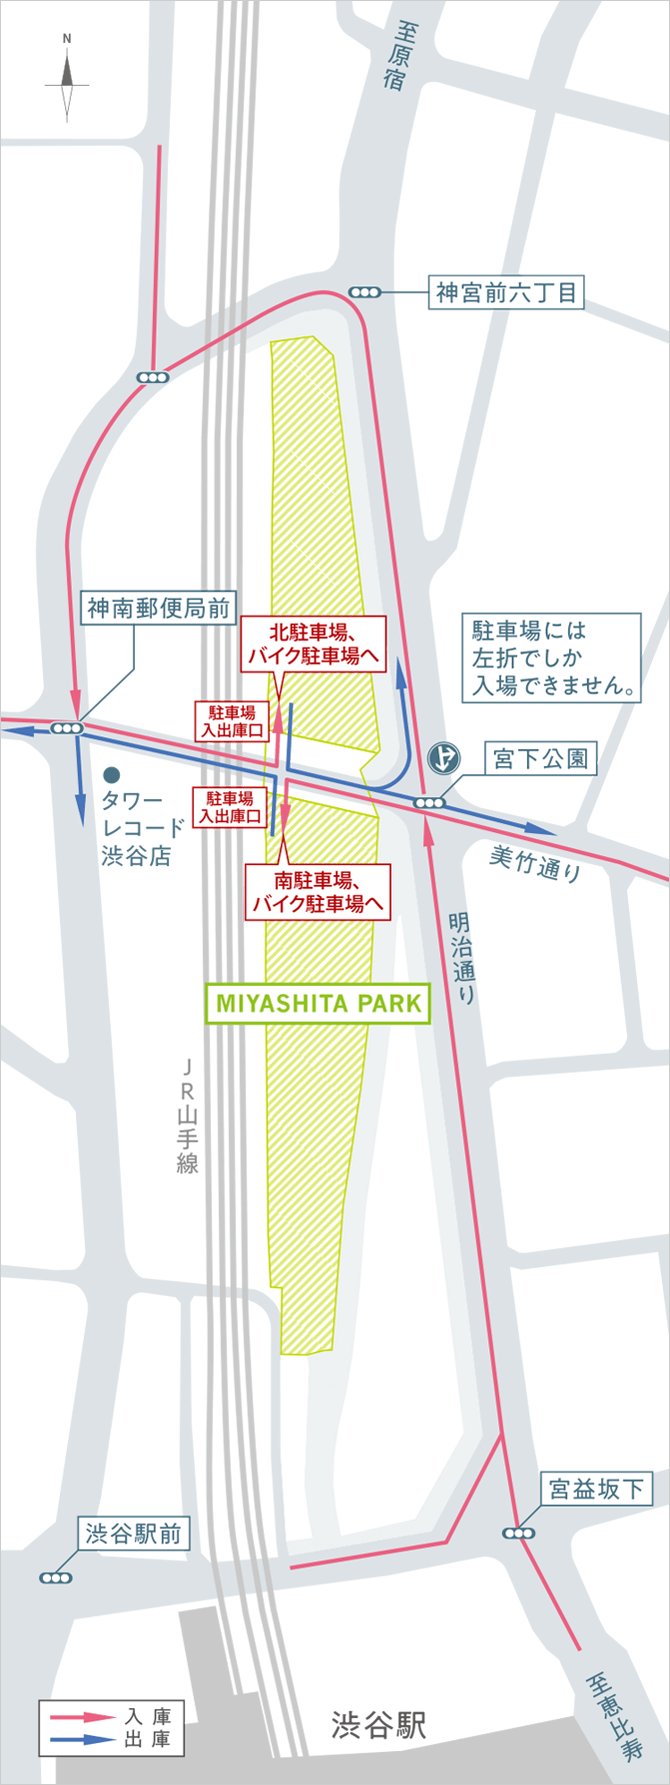 Access Miyashita Park 公式ウェブサイト